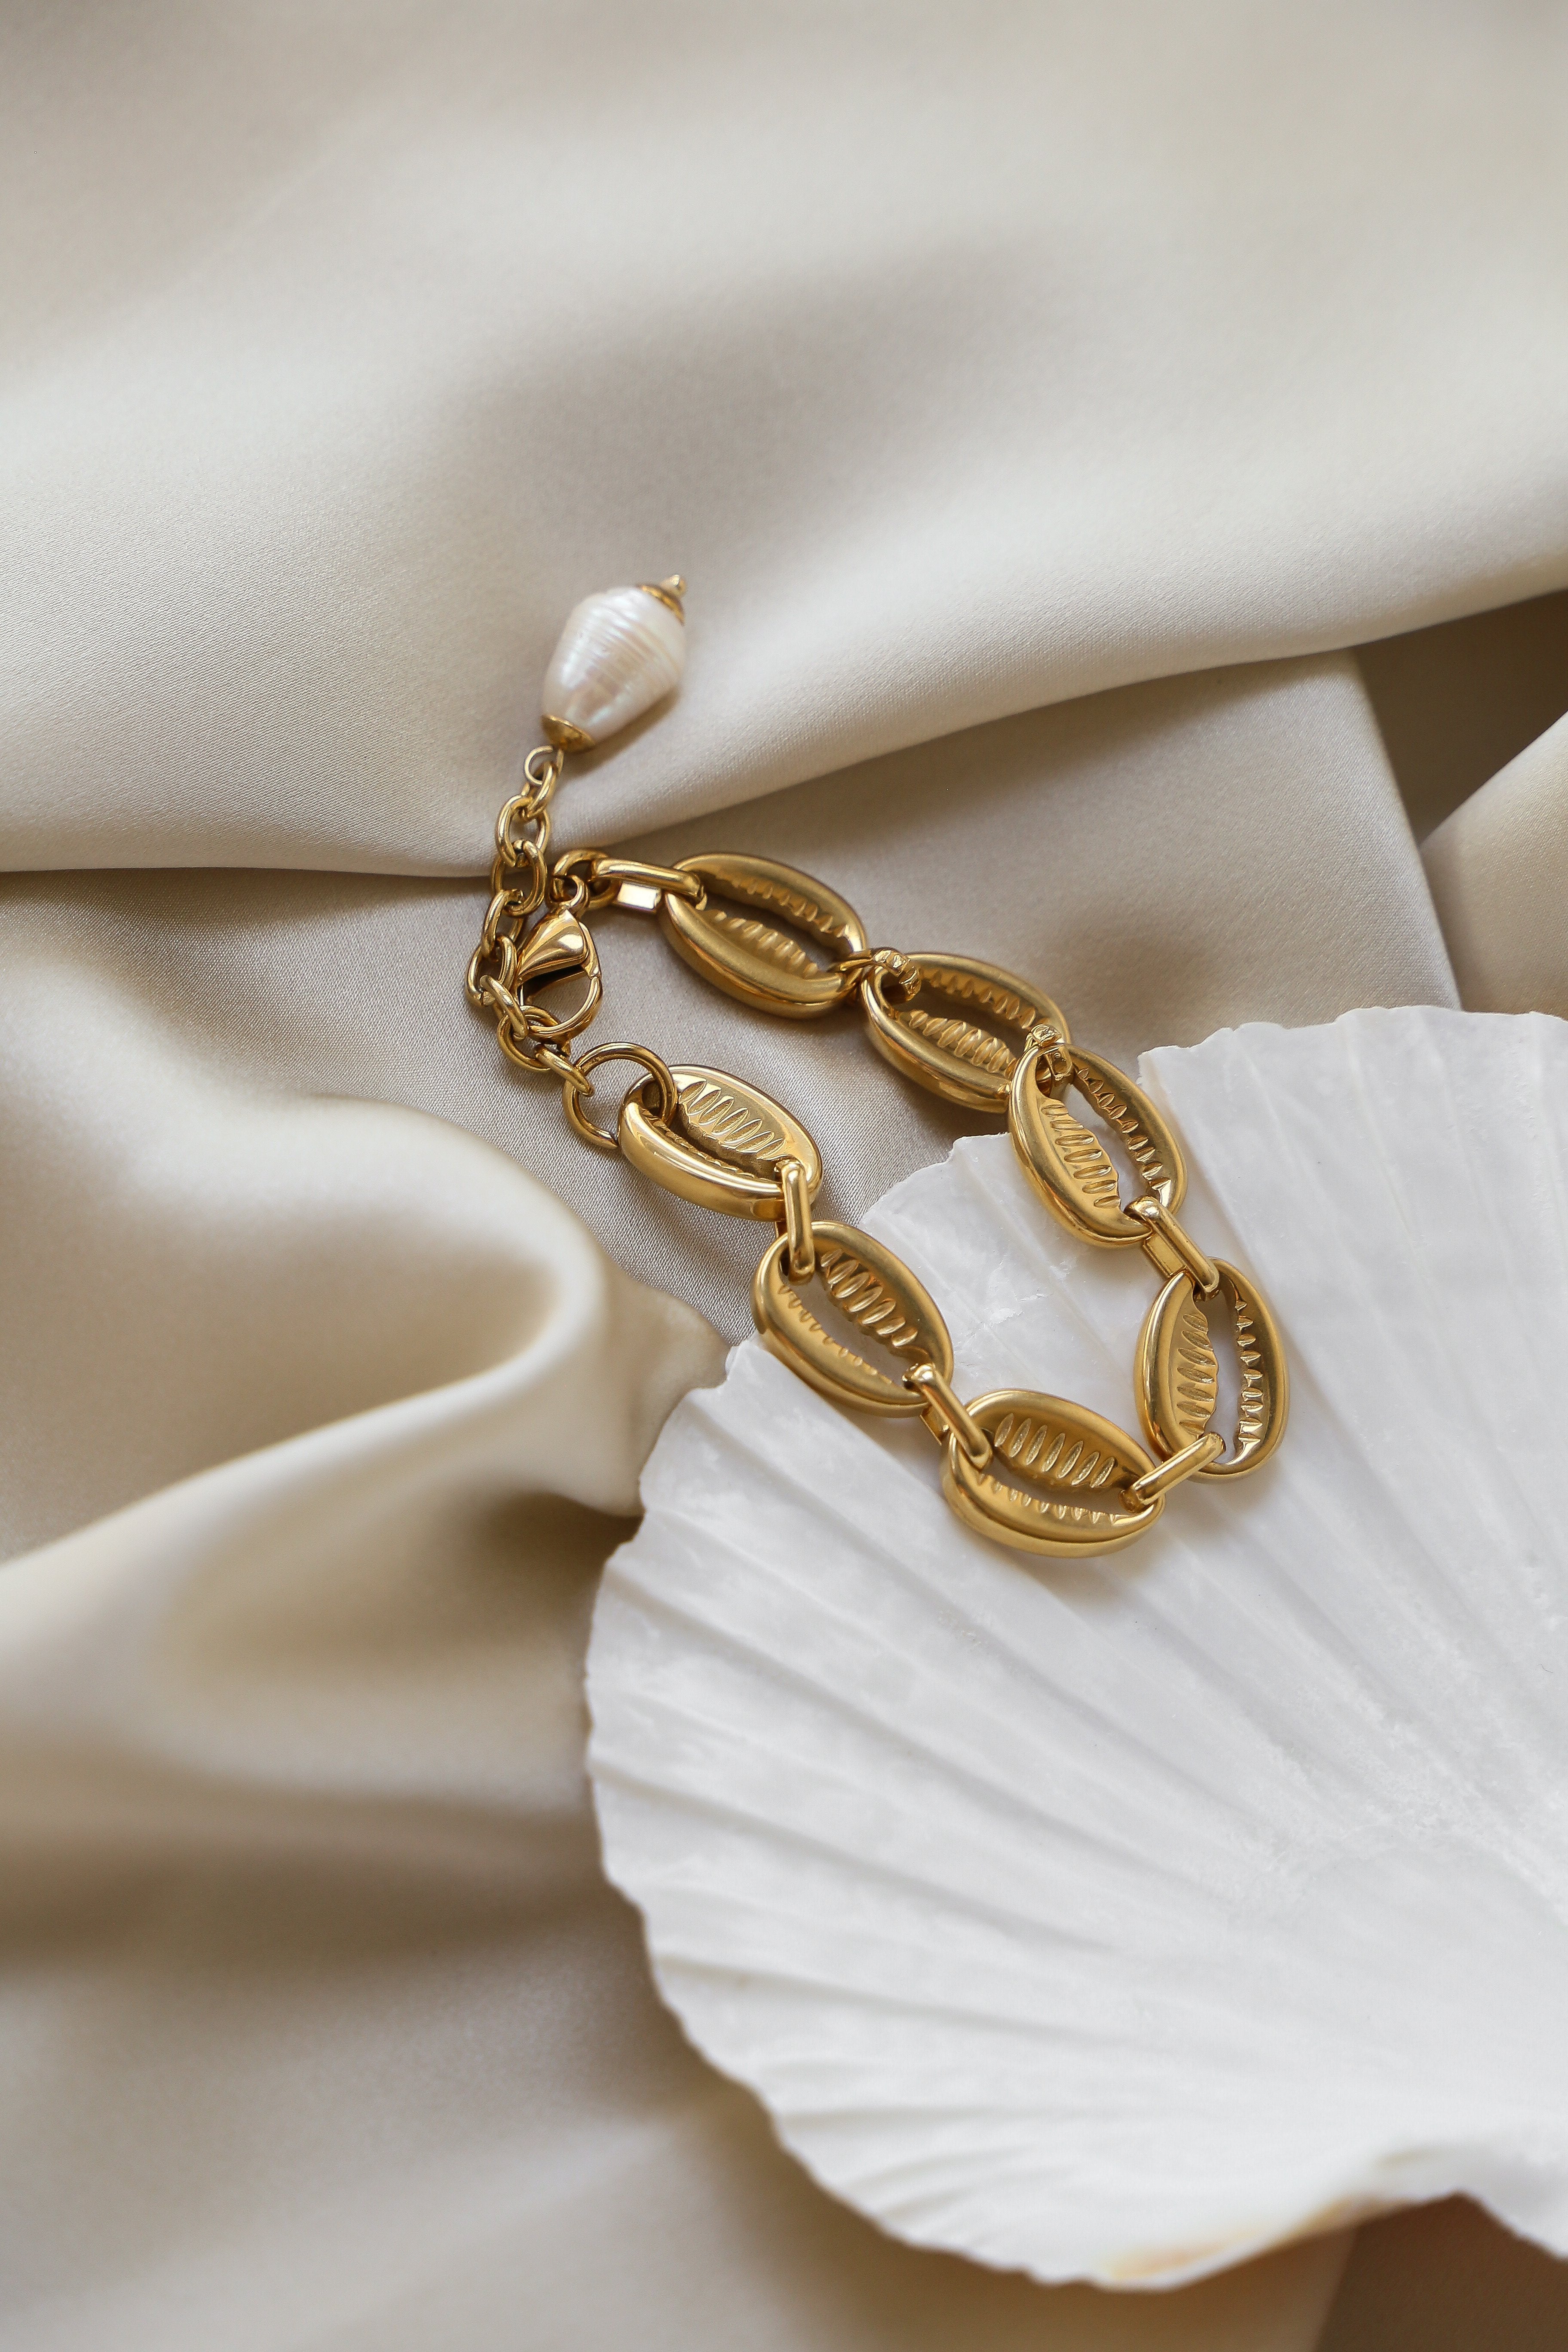 Fanny Bracelet - Boutique Minimaliste has waterproof, durable, elegant and vintage inspired jewelry